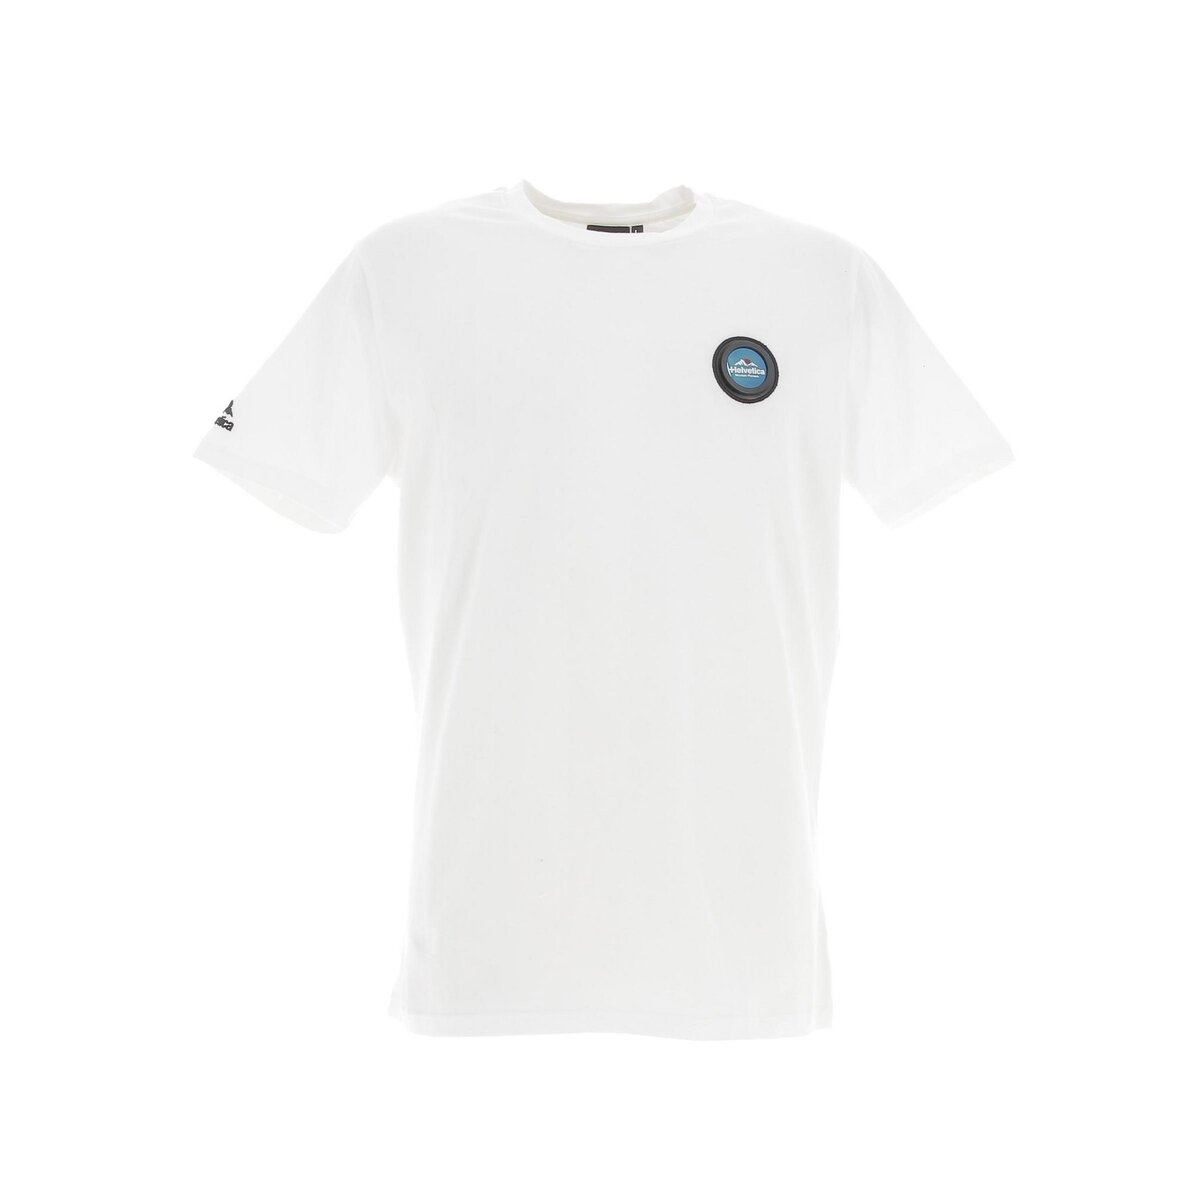 HELVETICA Tee shirt manches courtes Helvetica T-shirt  3-221